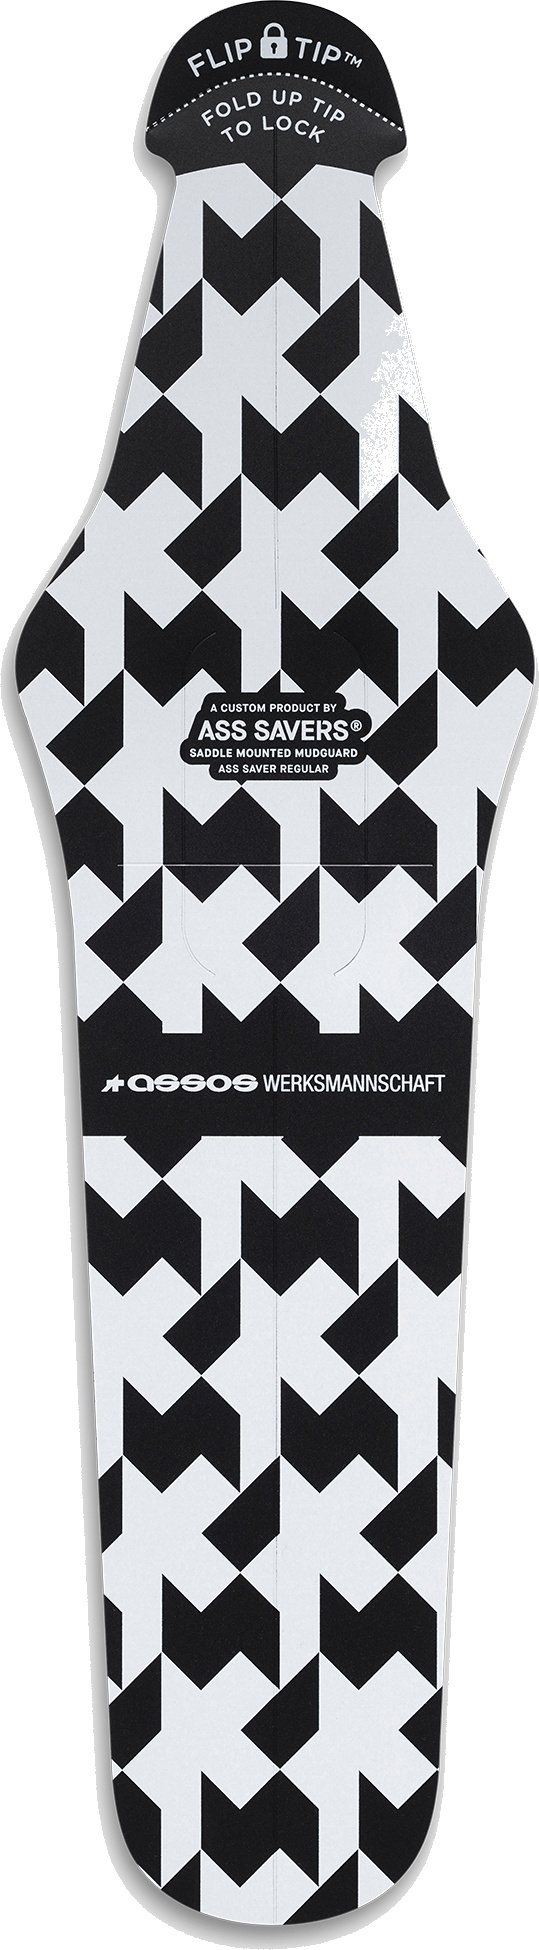 Tilbehør - Cykelskærme - Assos Mud Guard / Ass Saver Monogram